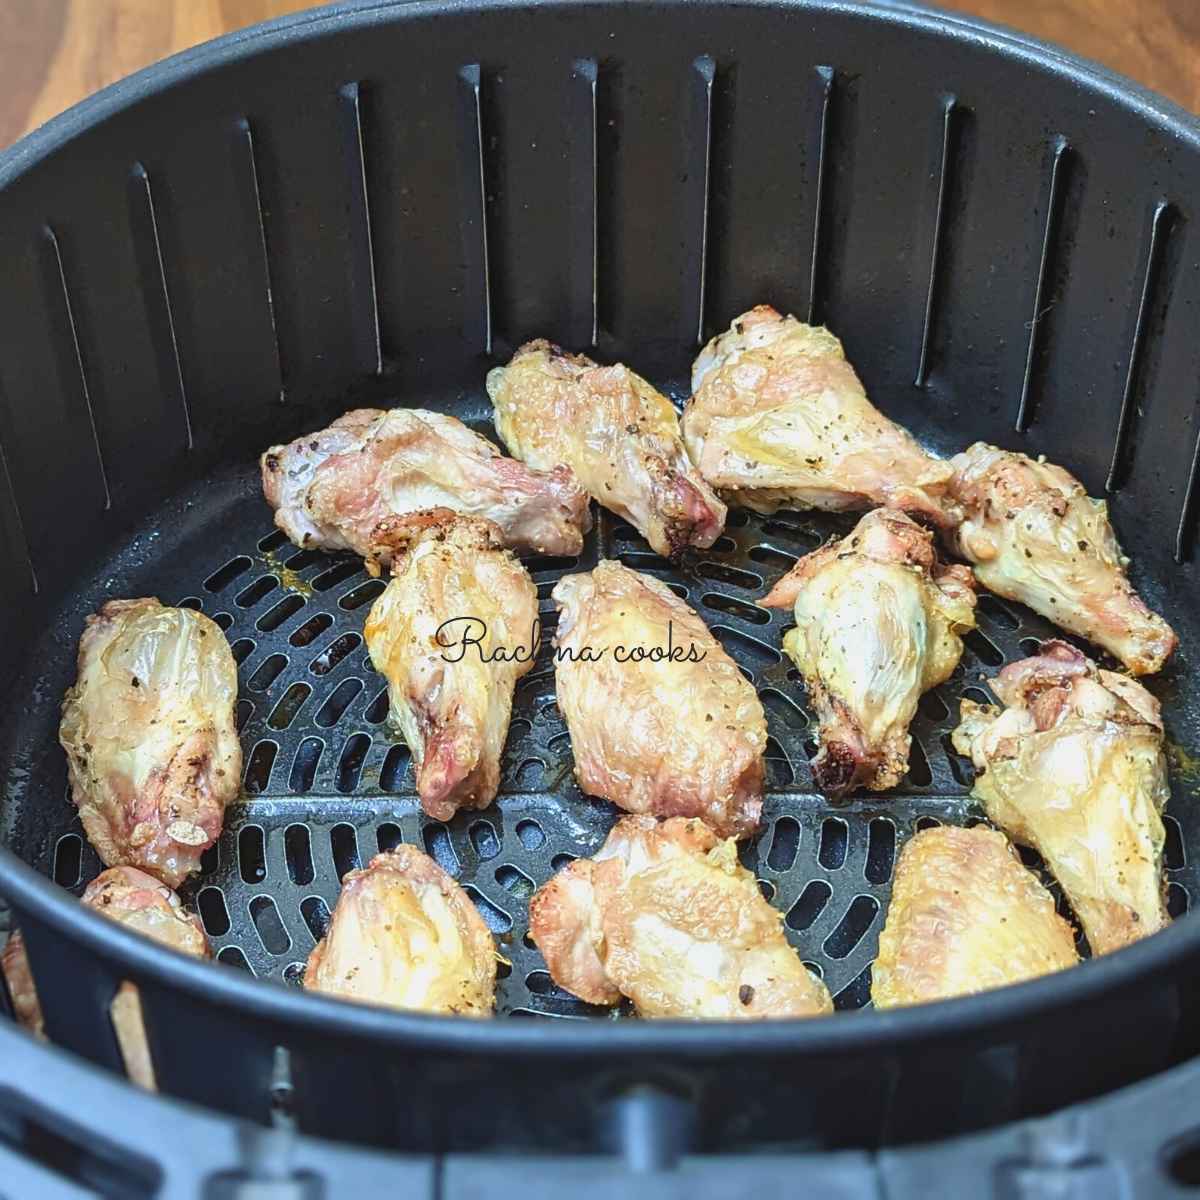 Crispy chicken wings after air frying in air fryer basket